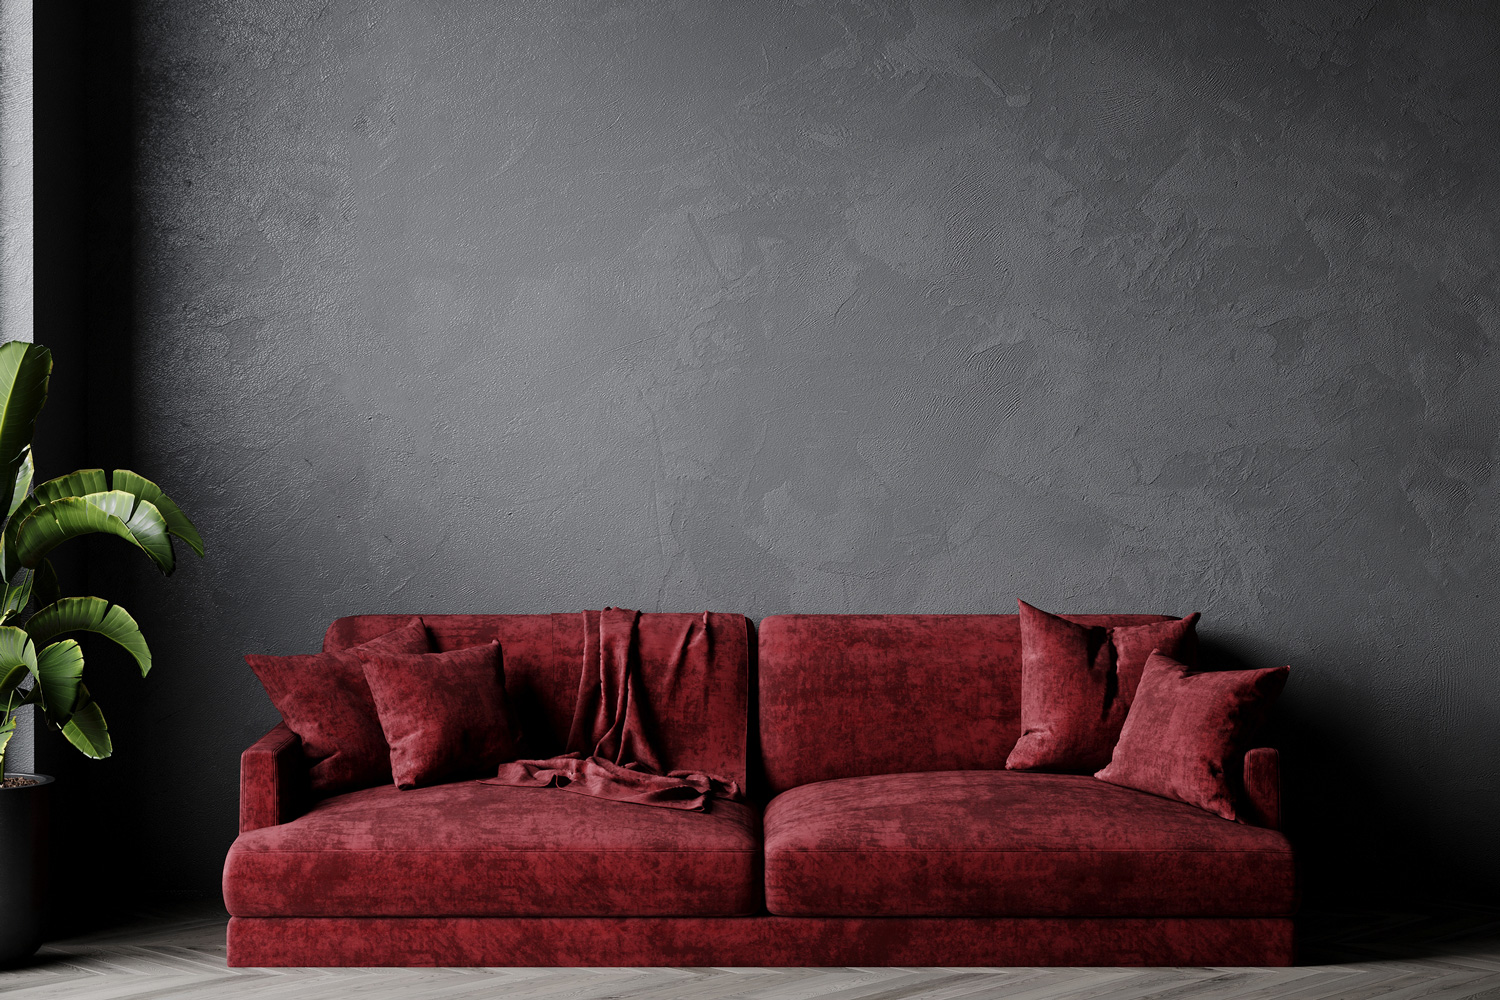 Modern dark room with red burgundy sofa. Empty mockup wall in black plaster stucco - microsement or concrete. luxury interior design.